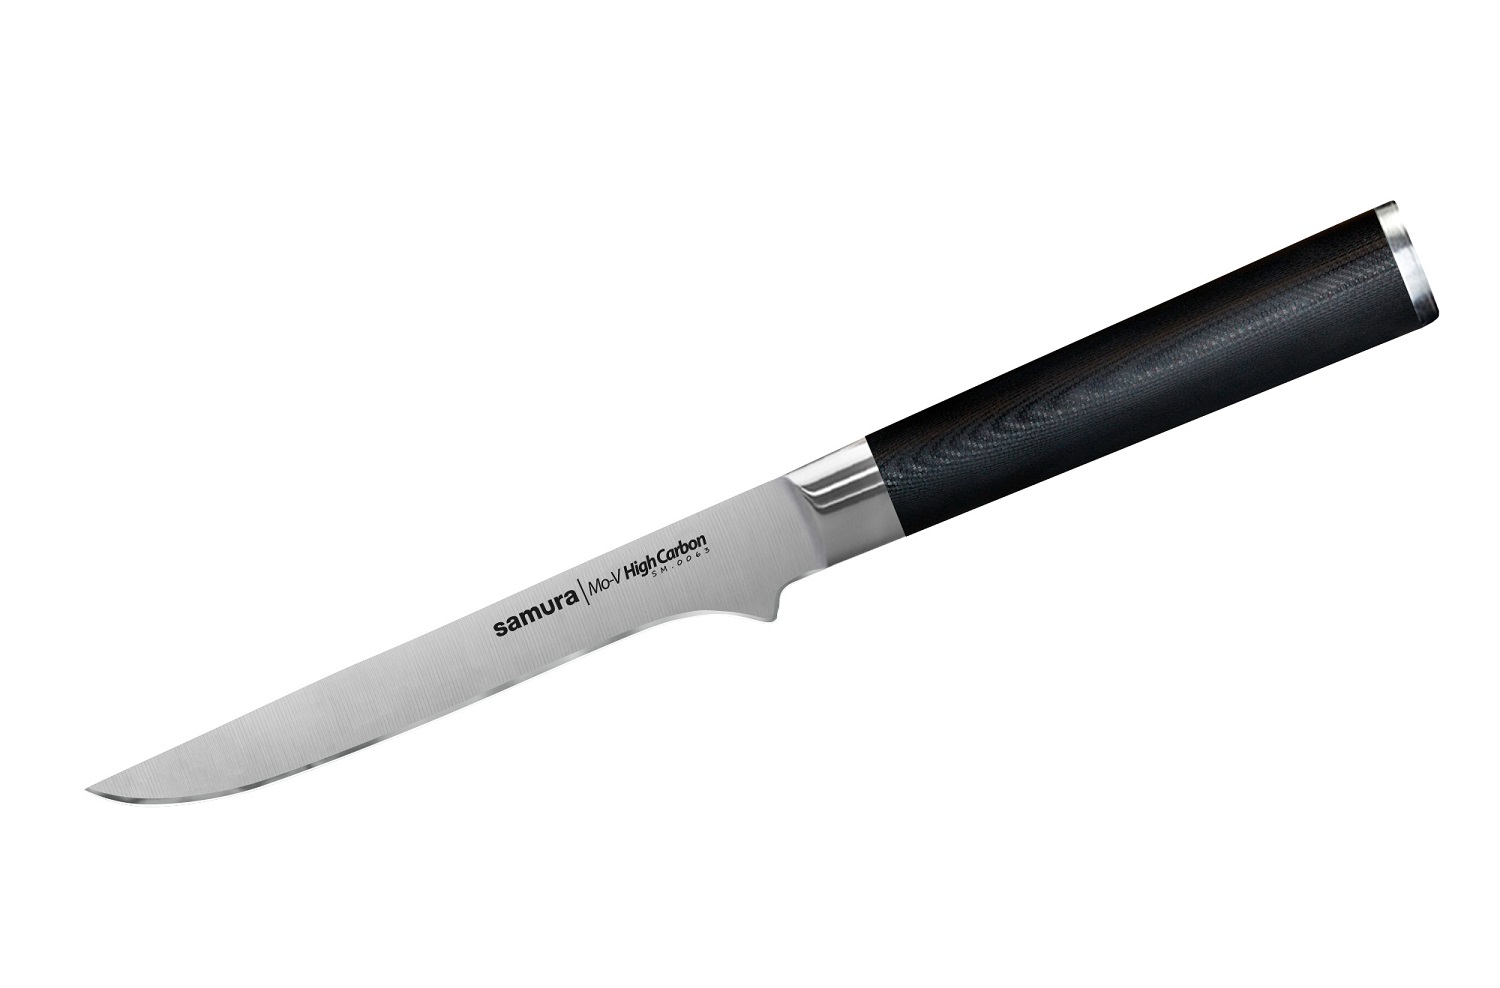 Нож Samura обвалочный Mo-V, 16,5 см, G-10 нож для овощей mo v 9 см sm 0010 k samura